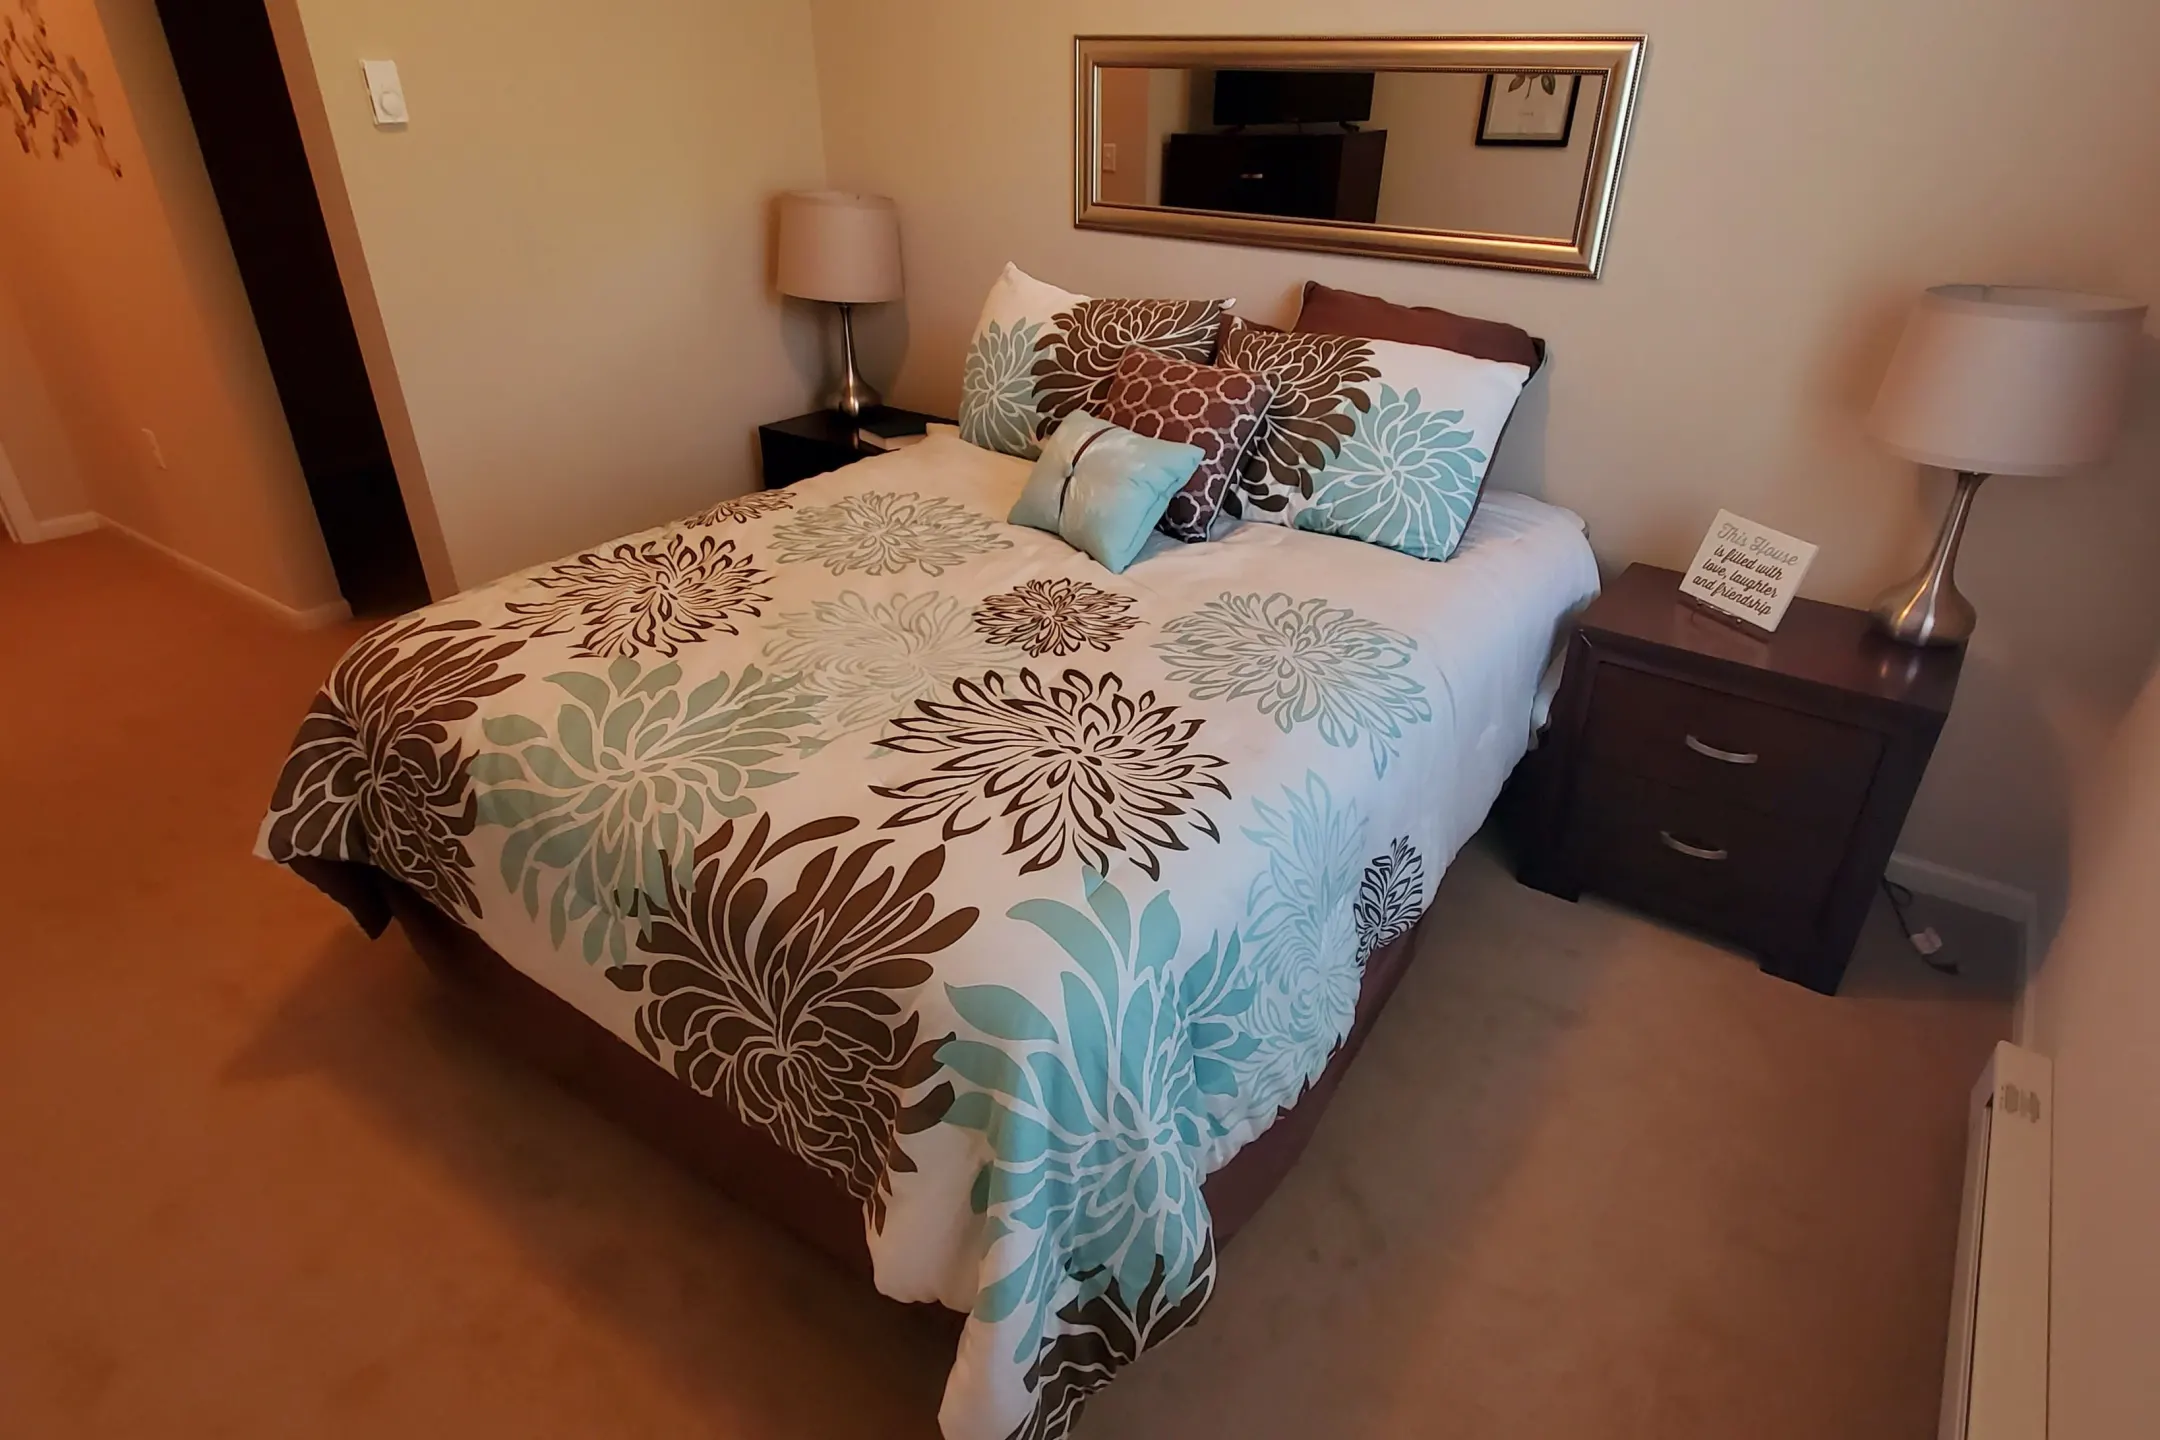 Bedroom - Eagle Crest Apartments - Williston, ND